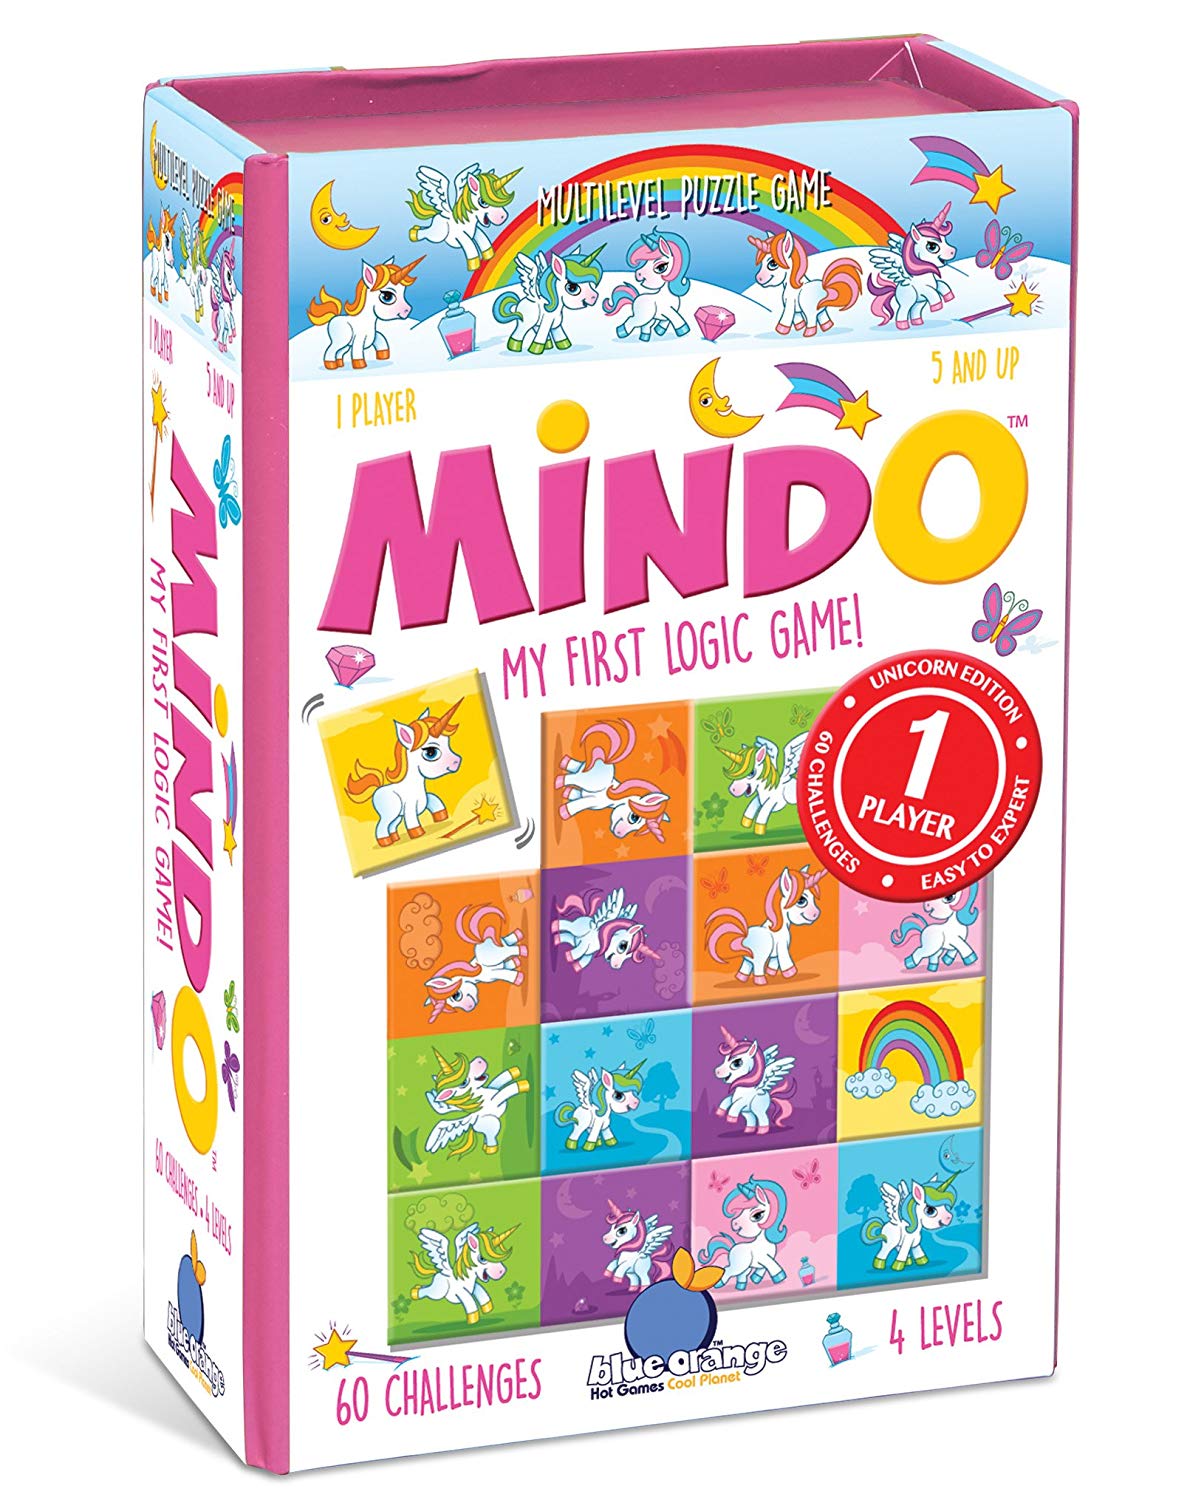 Mindo: Unicorn Game